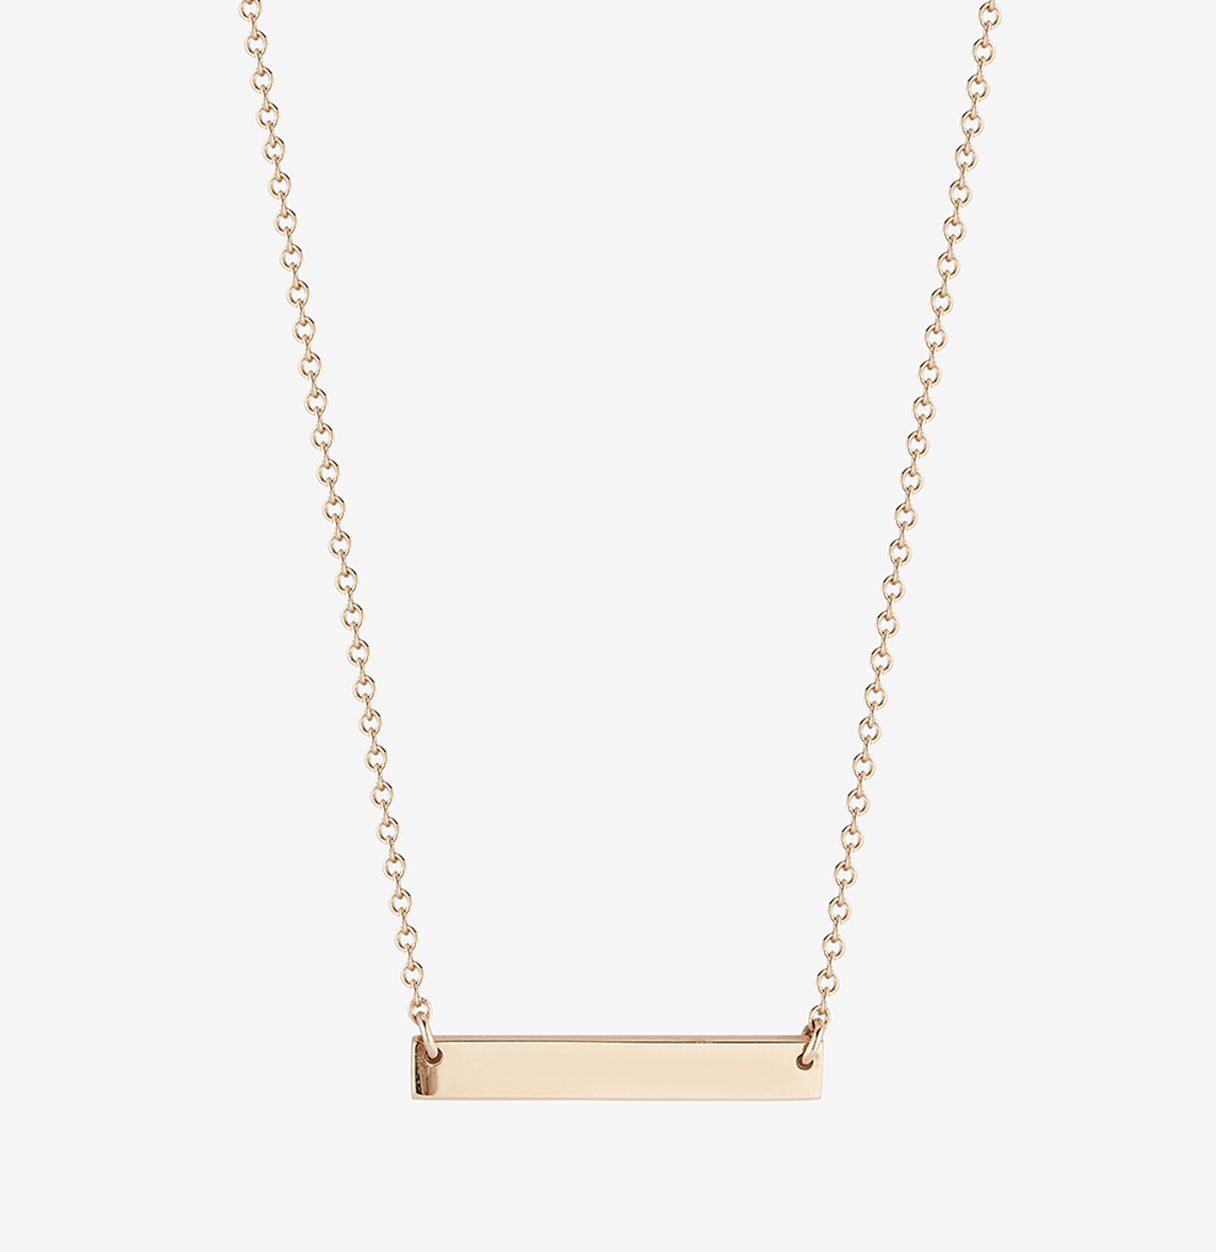 Custom Horizontal Bar Necklace in Cavan Gold and 14K Gold